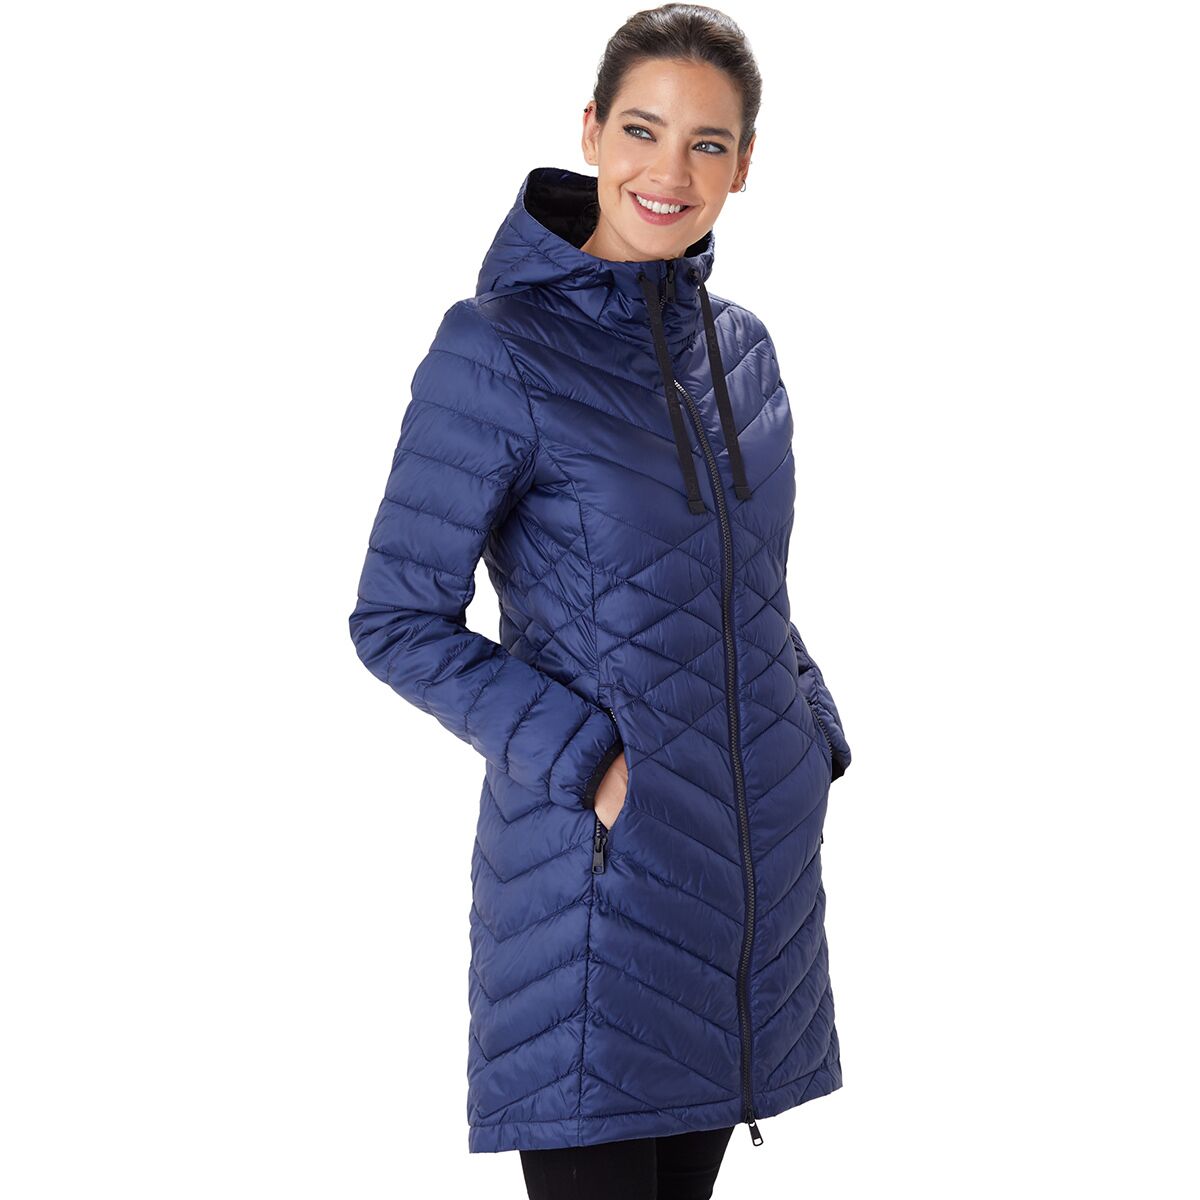 Lole Claudia Insulated Jacket - Women's | eBay